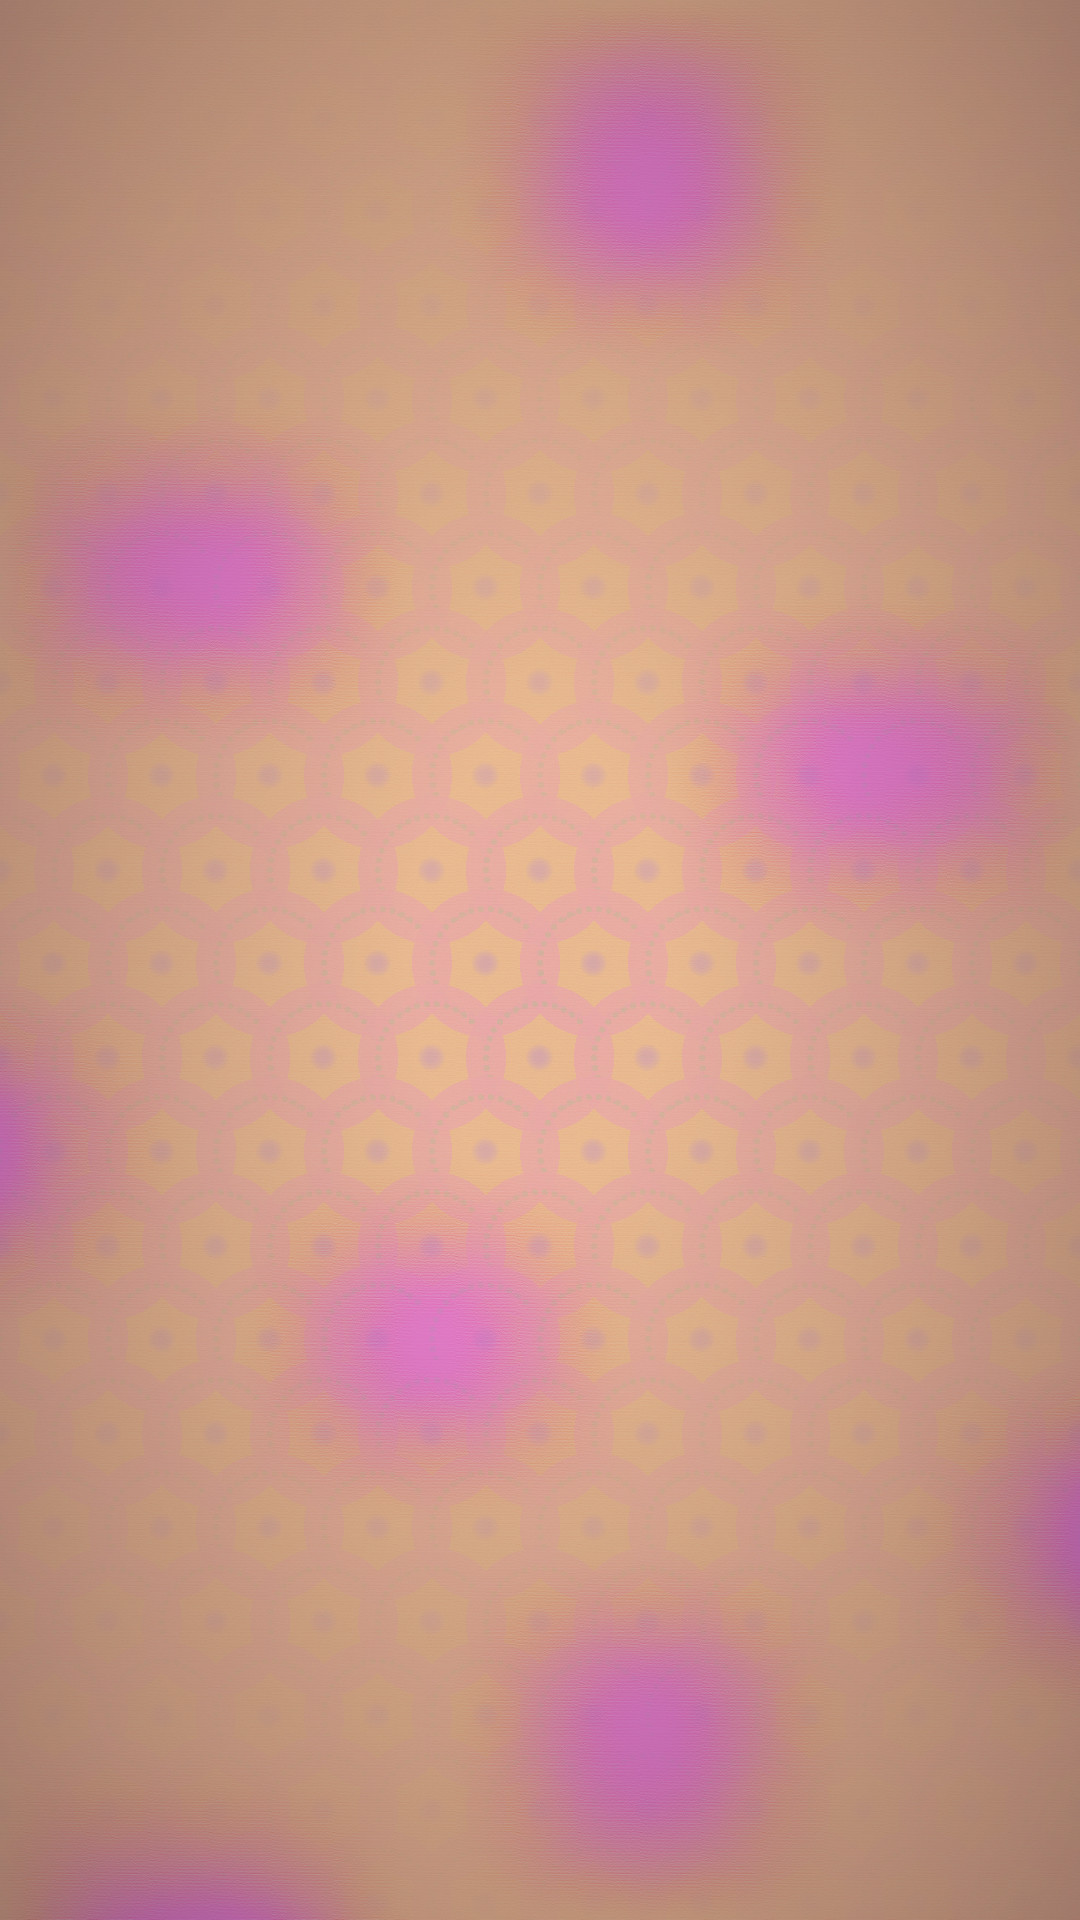 1080x1920 Agradationorangepatternpink. iPhone 7 Plus Wallpaper